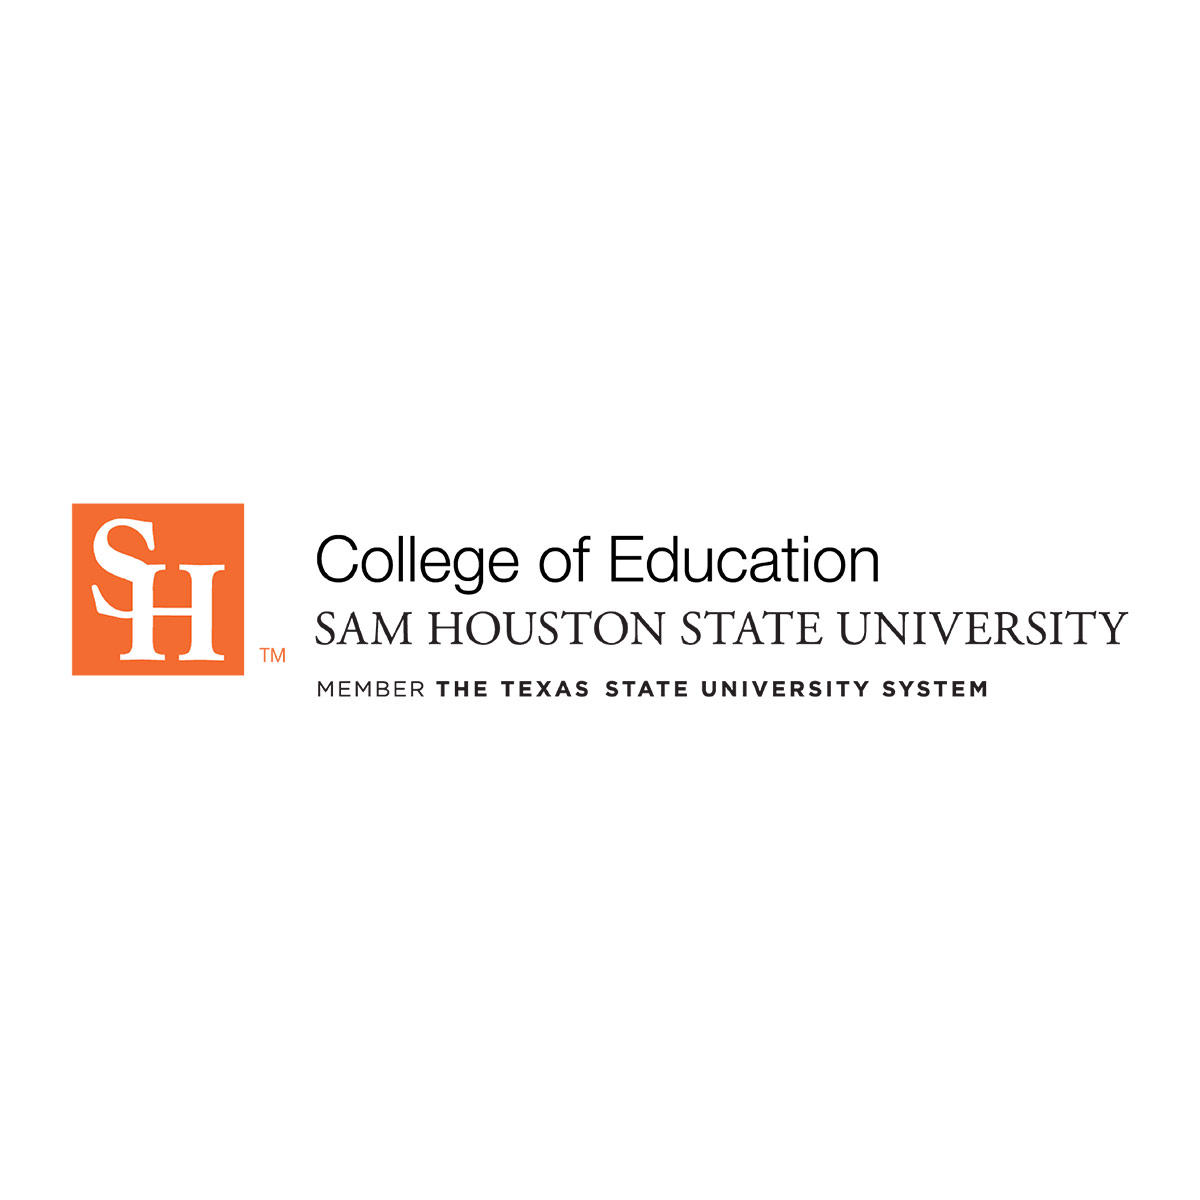 Sam Houston State University College of Education logo